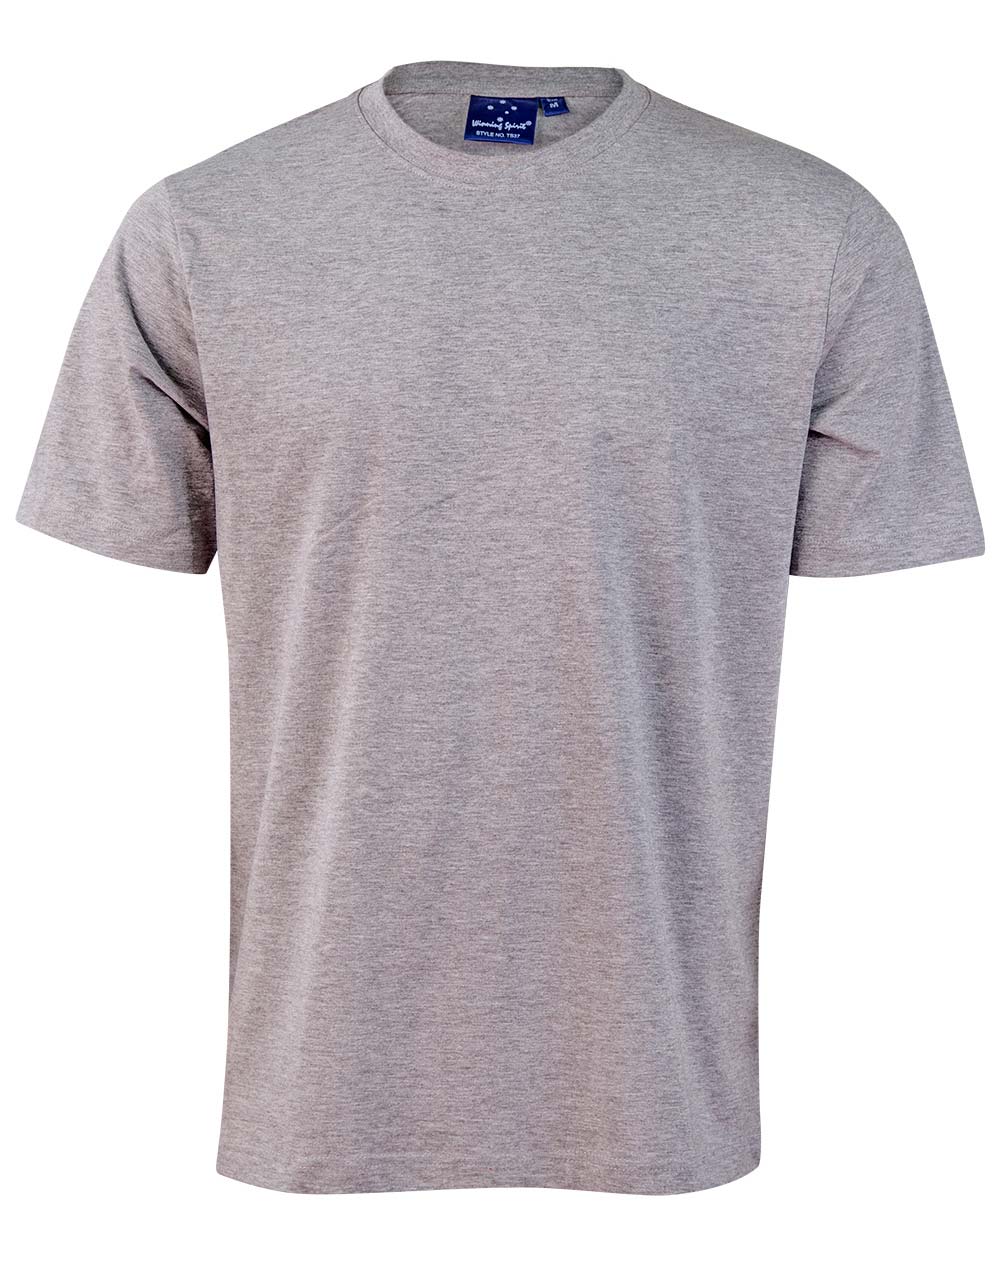 Custom (Gold) Semi-Fitted T-Shirts Men's Online in Perh Australia